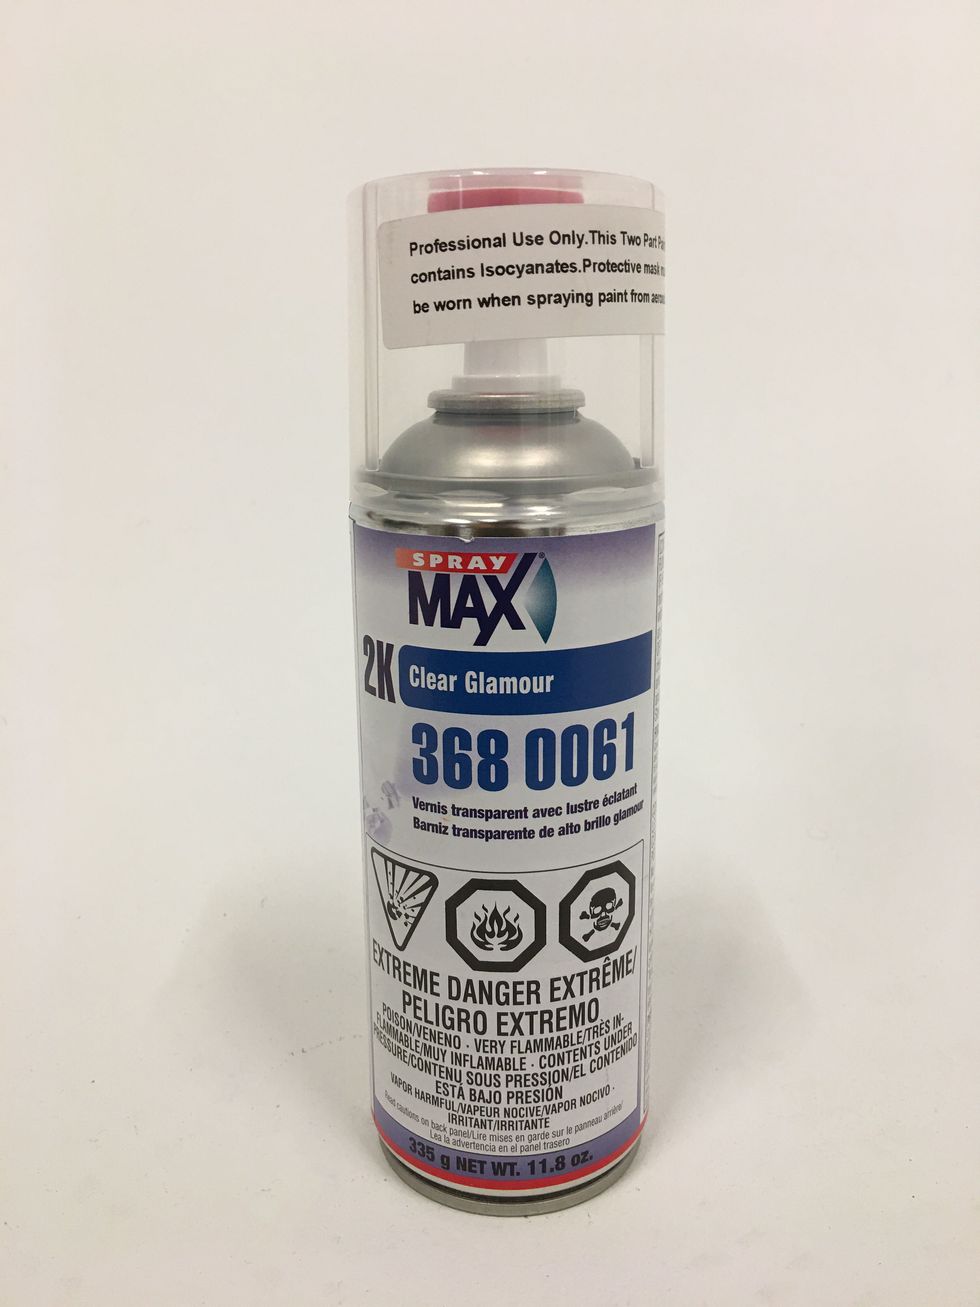 Spray Max Clear Glamour 2K High Gloss Finish Clear Coat Spray Paint